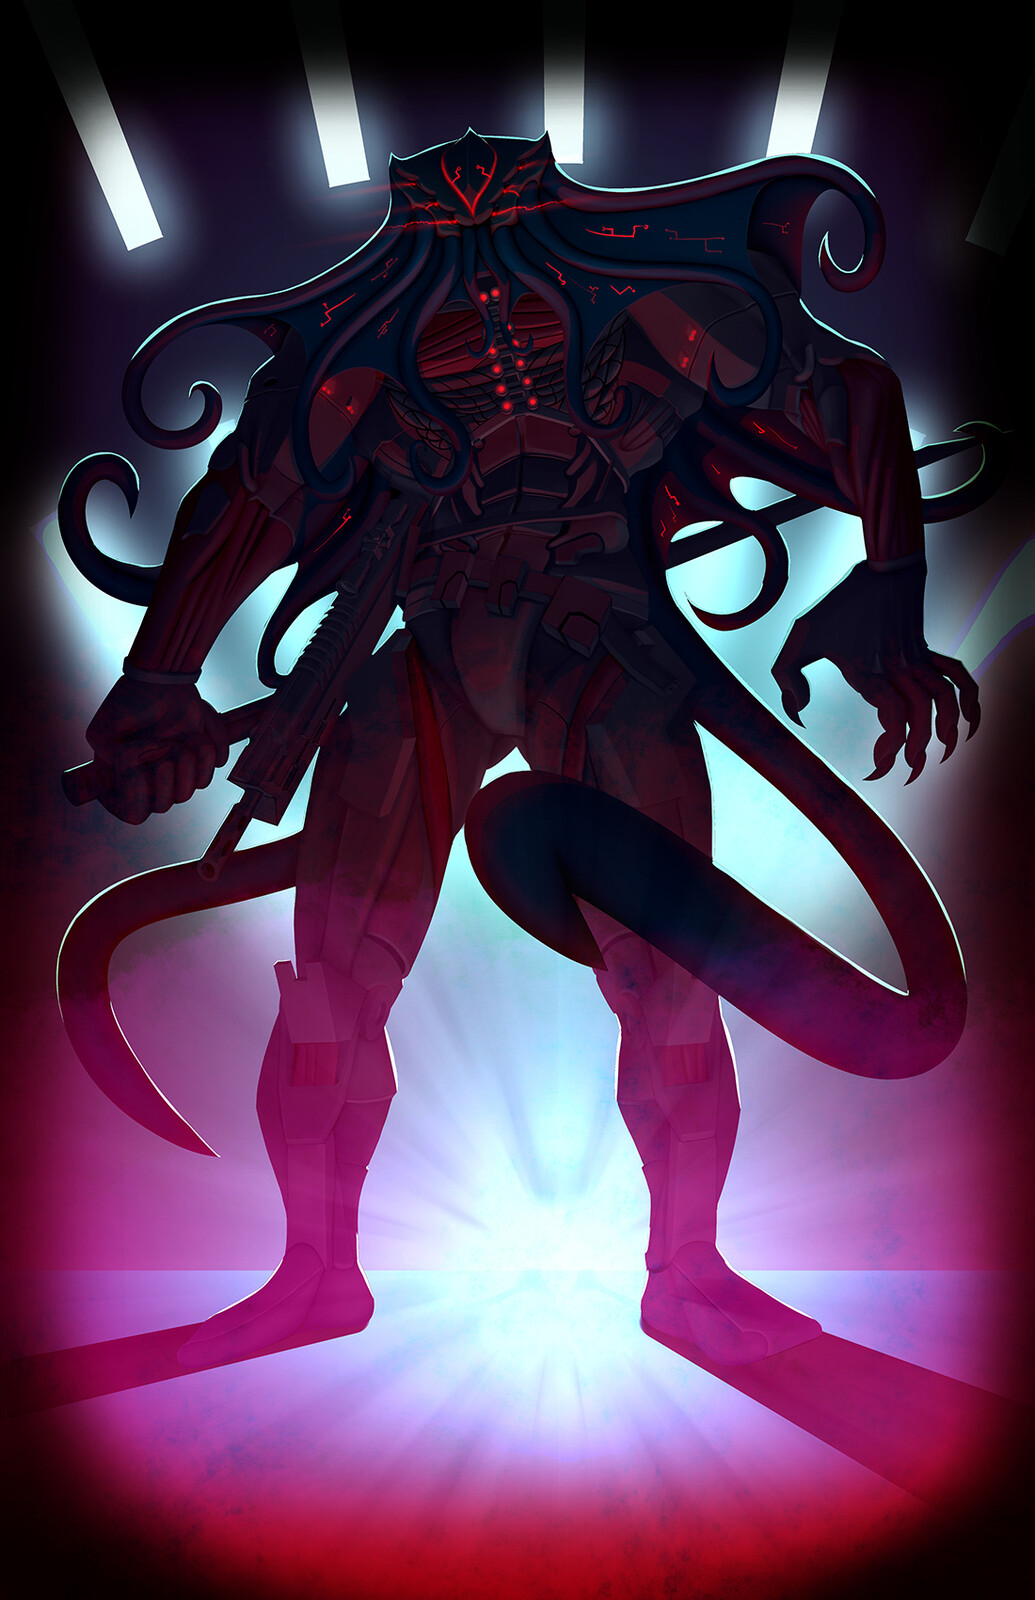 Cyber Monster (Darker Version)